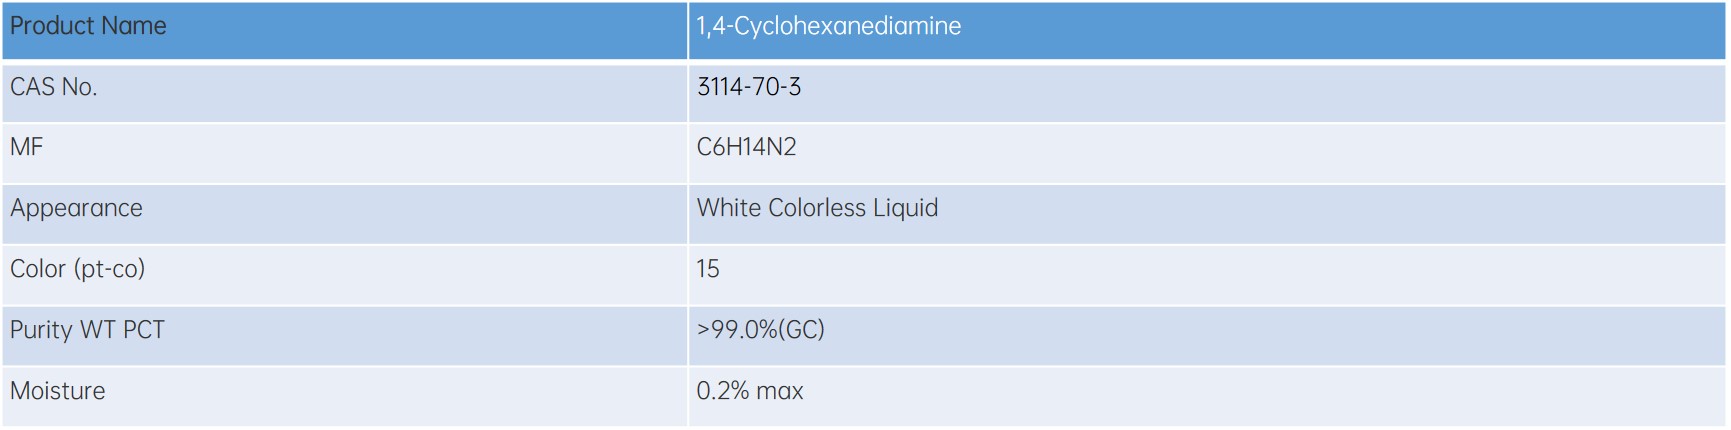 1,4-Cyclohexanediamine 